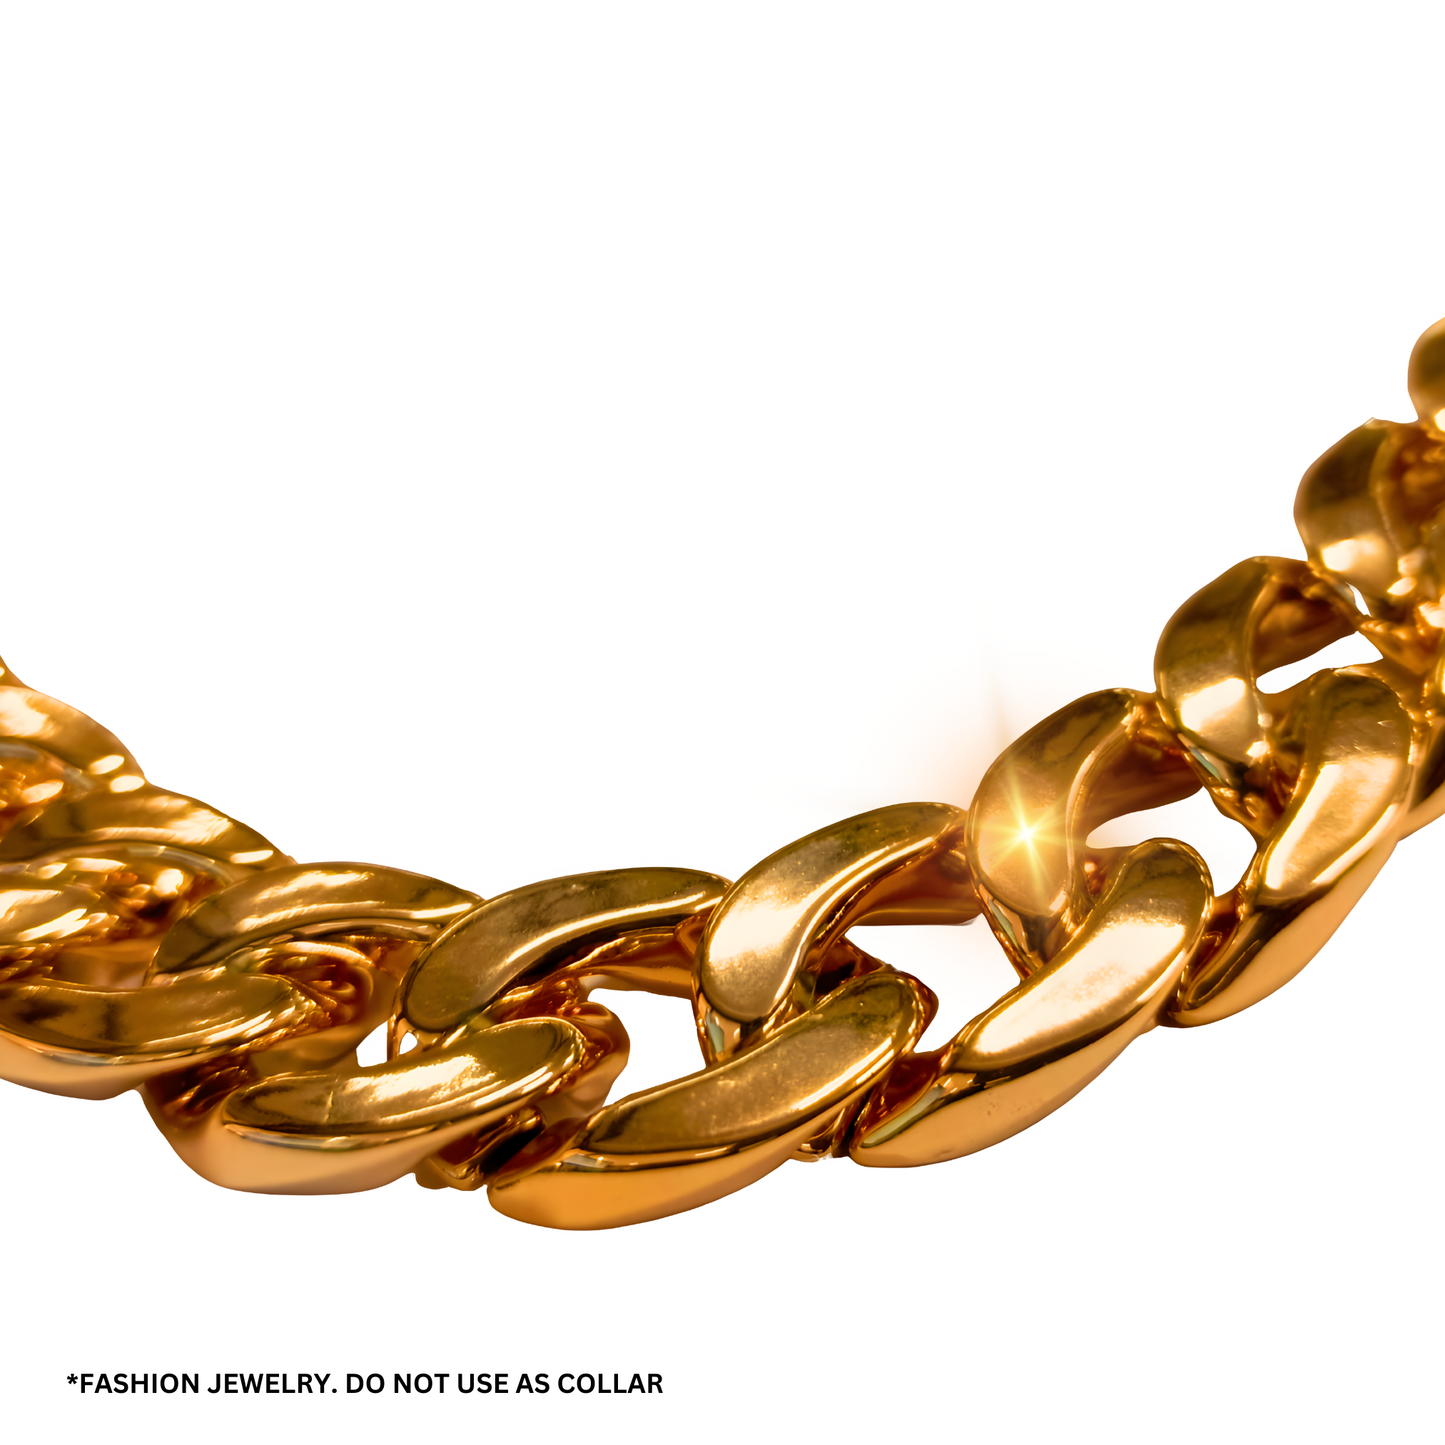 BASIL Gold Chain Dog Jewelry